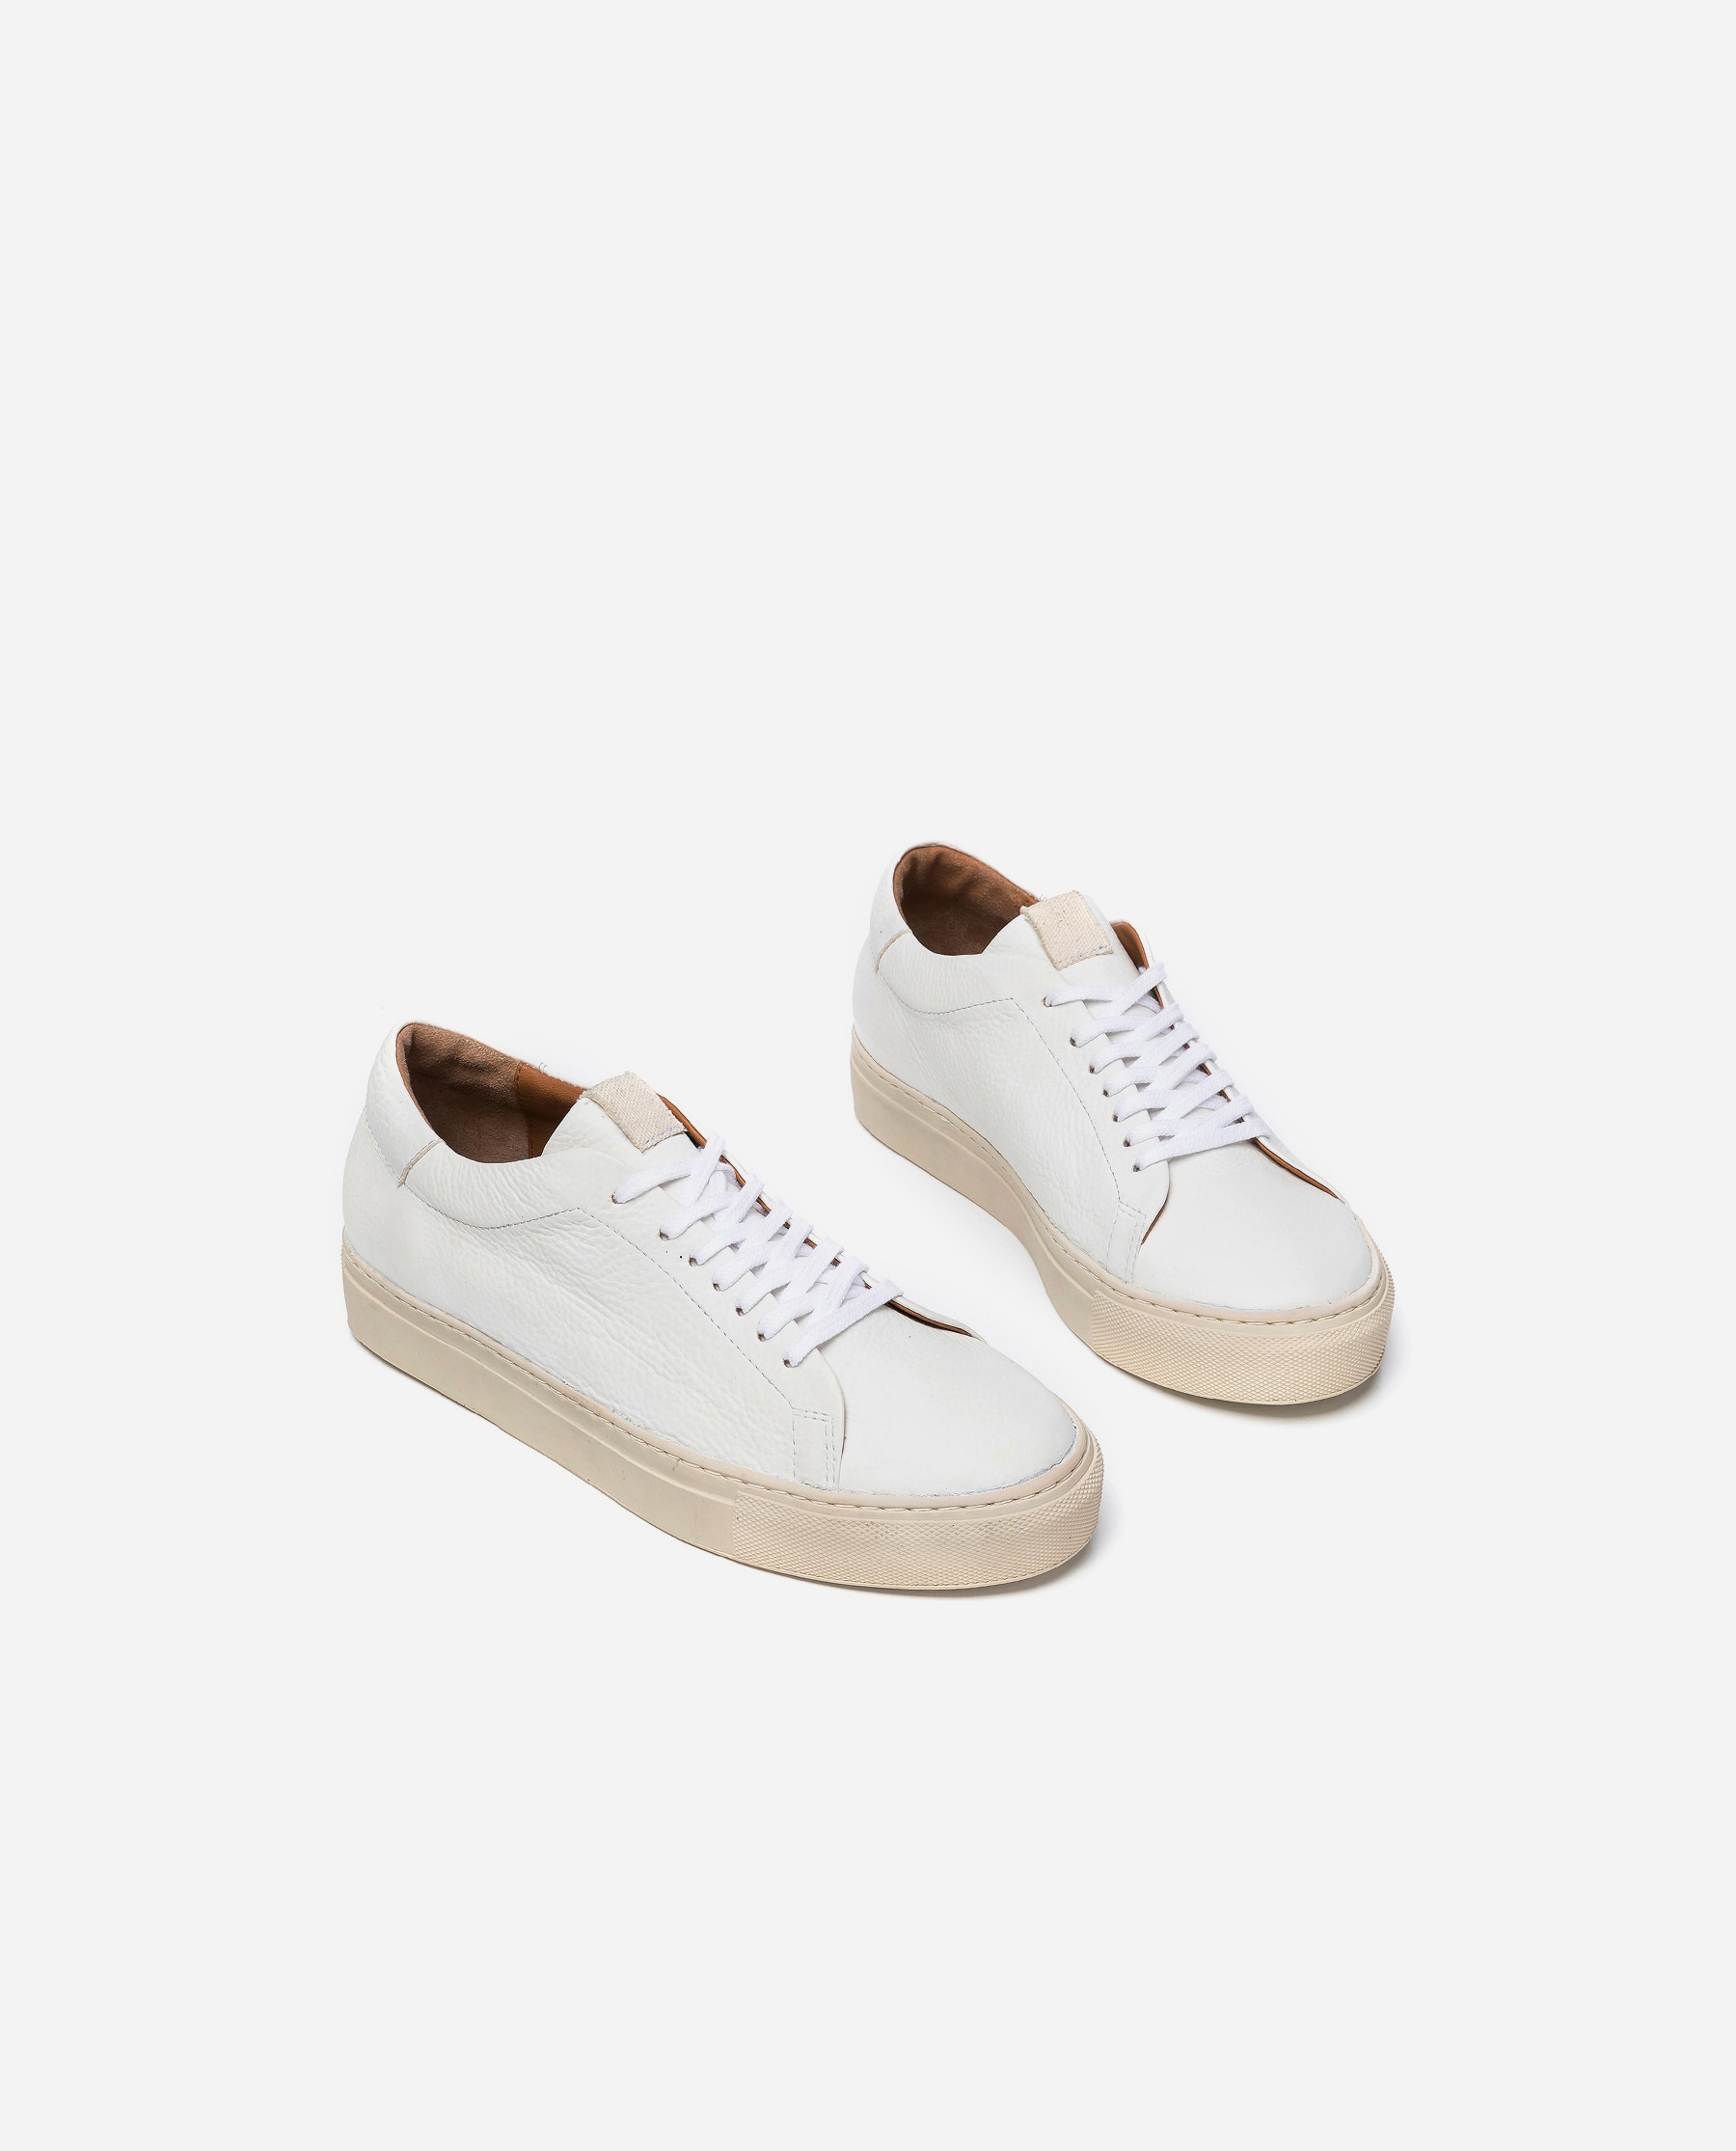 Stockholm Leather White | Flattered